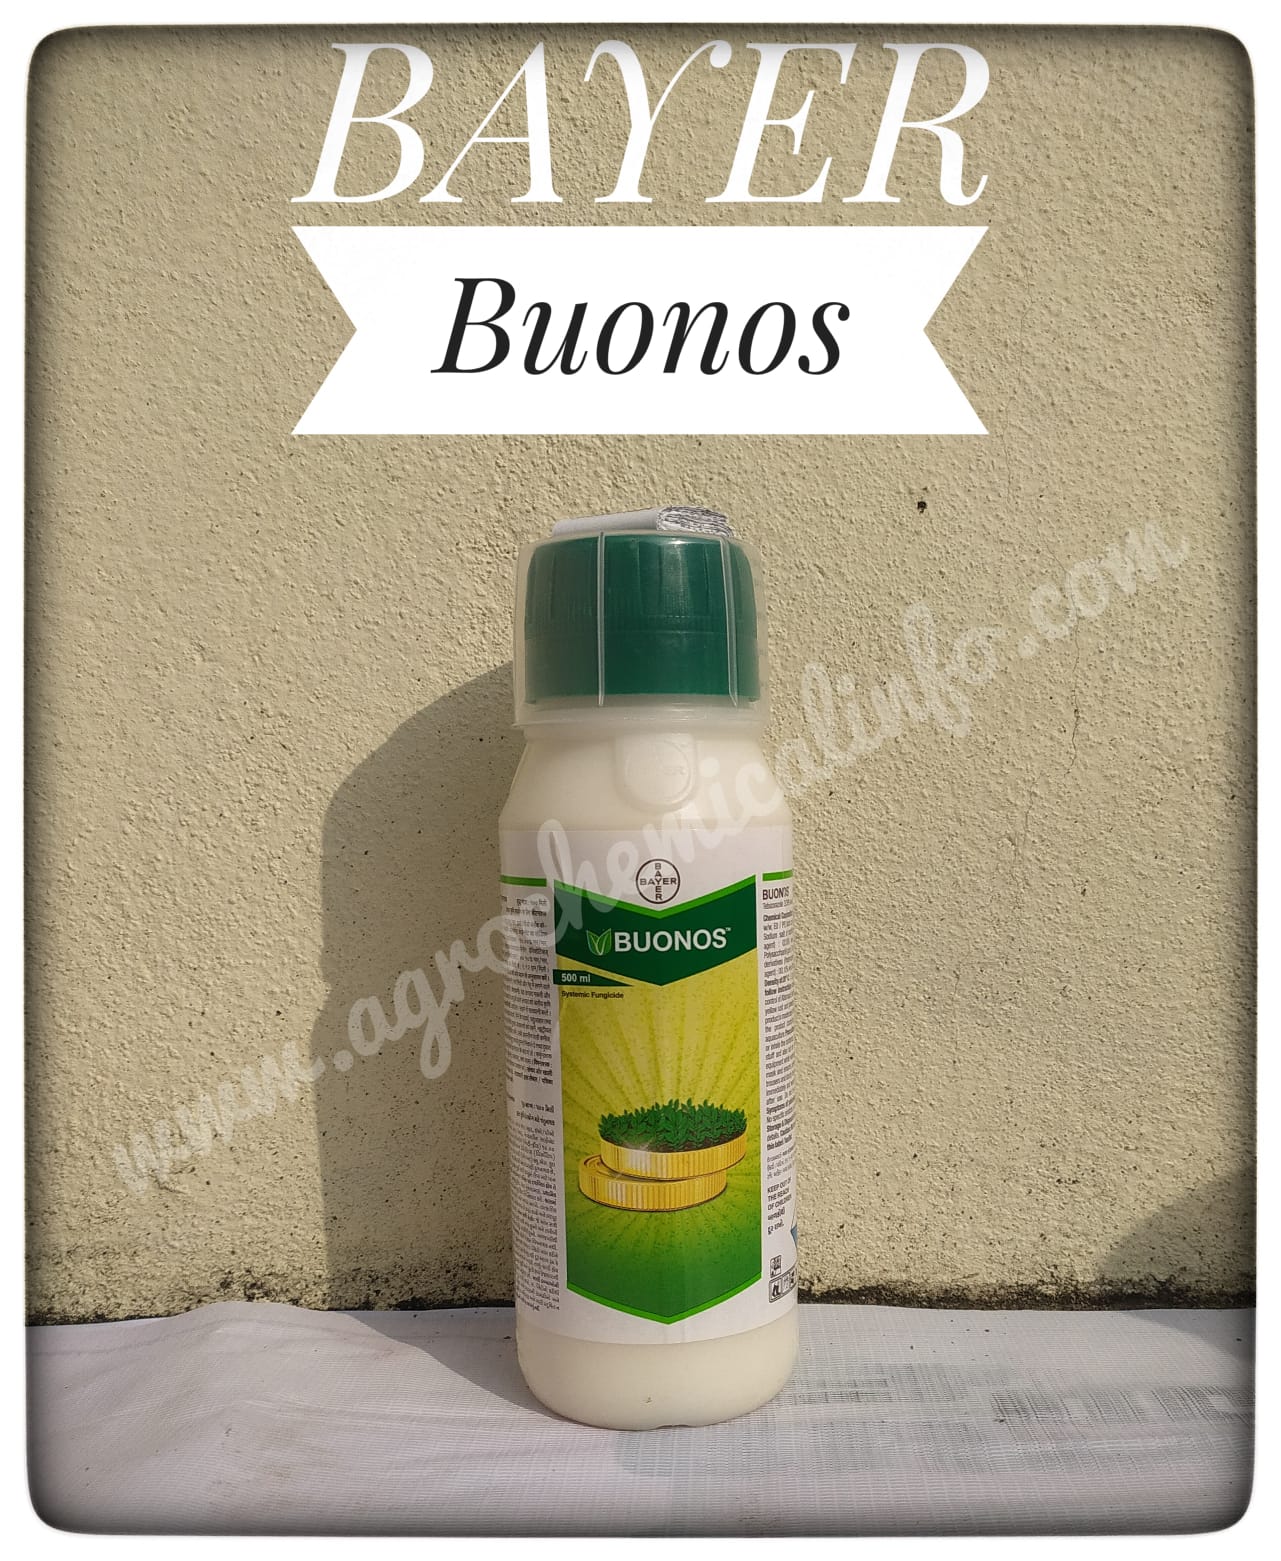 Bayer Buonos for Sheath Blight